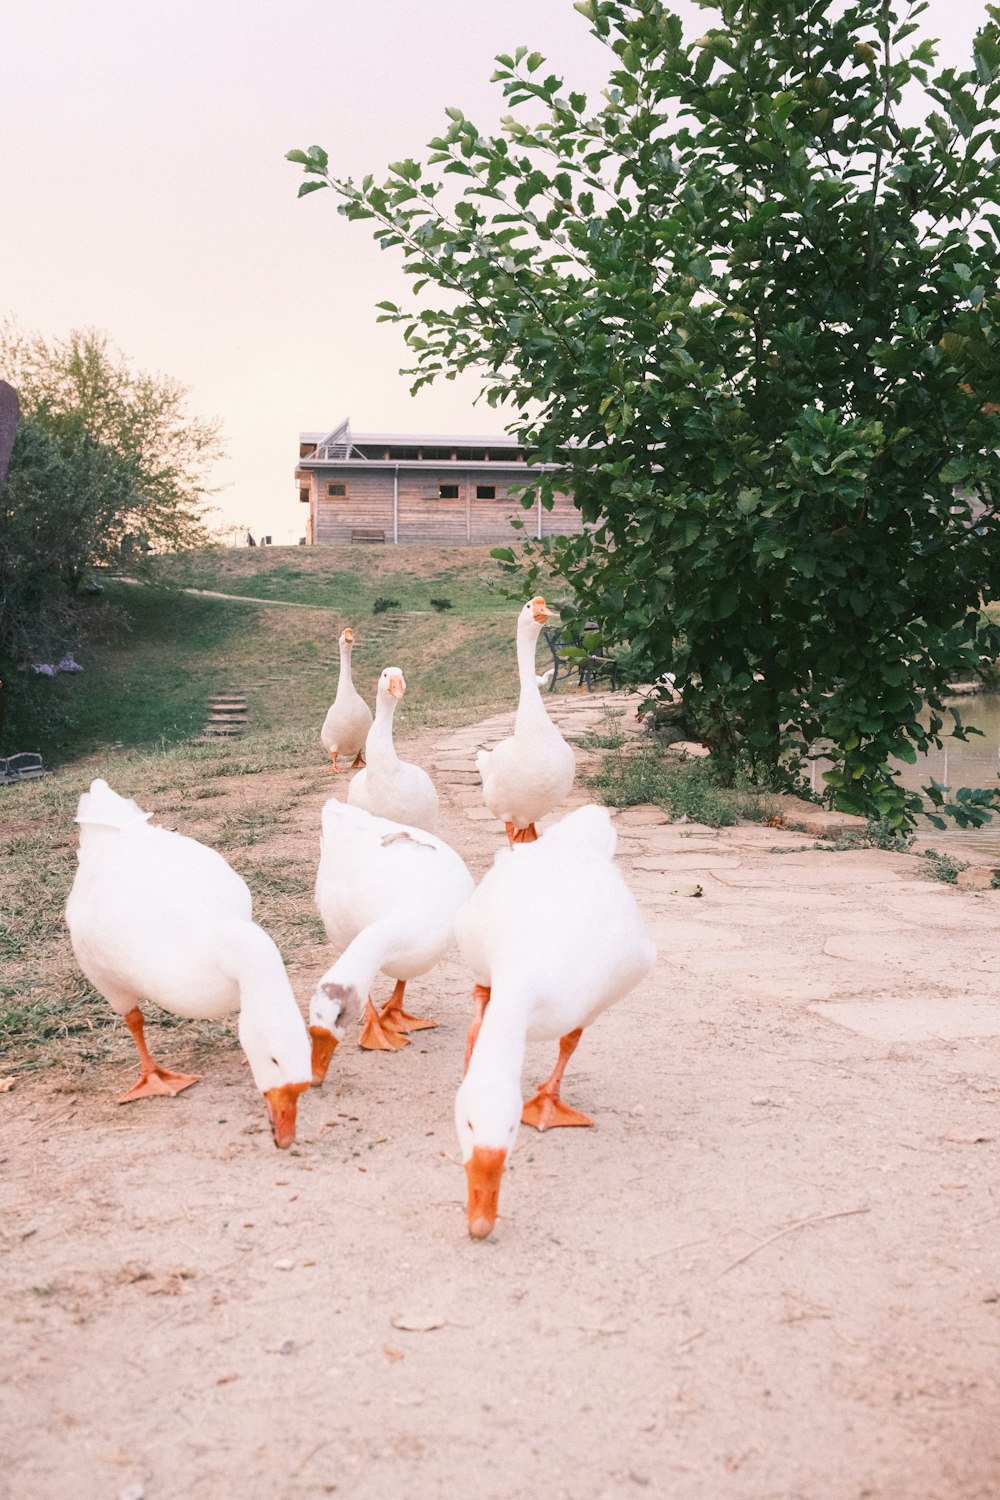 a group of ducks walking across a dirt road